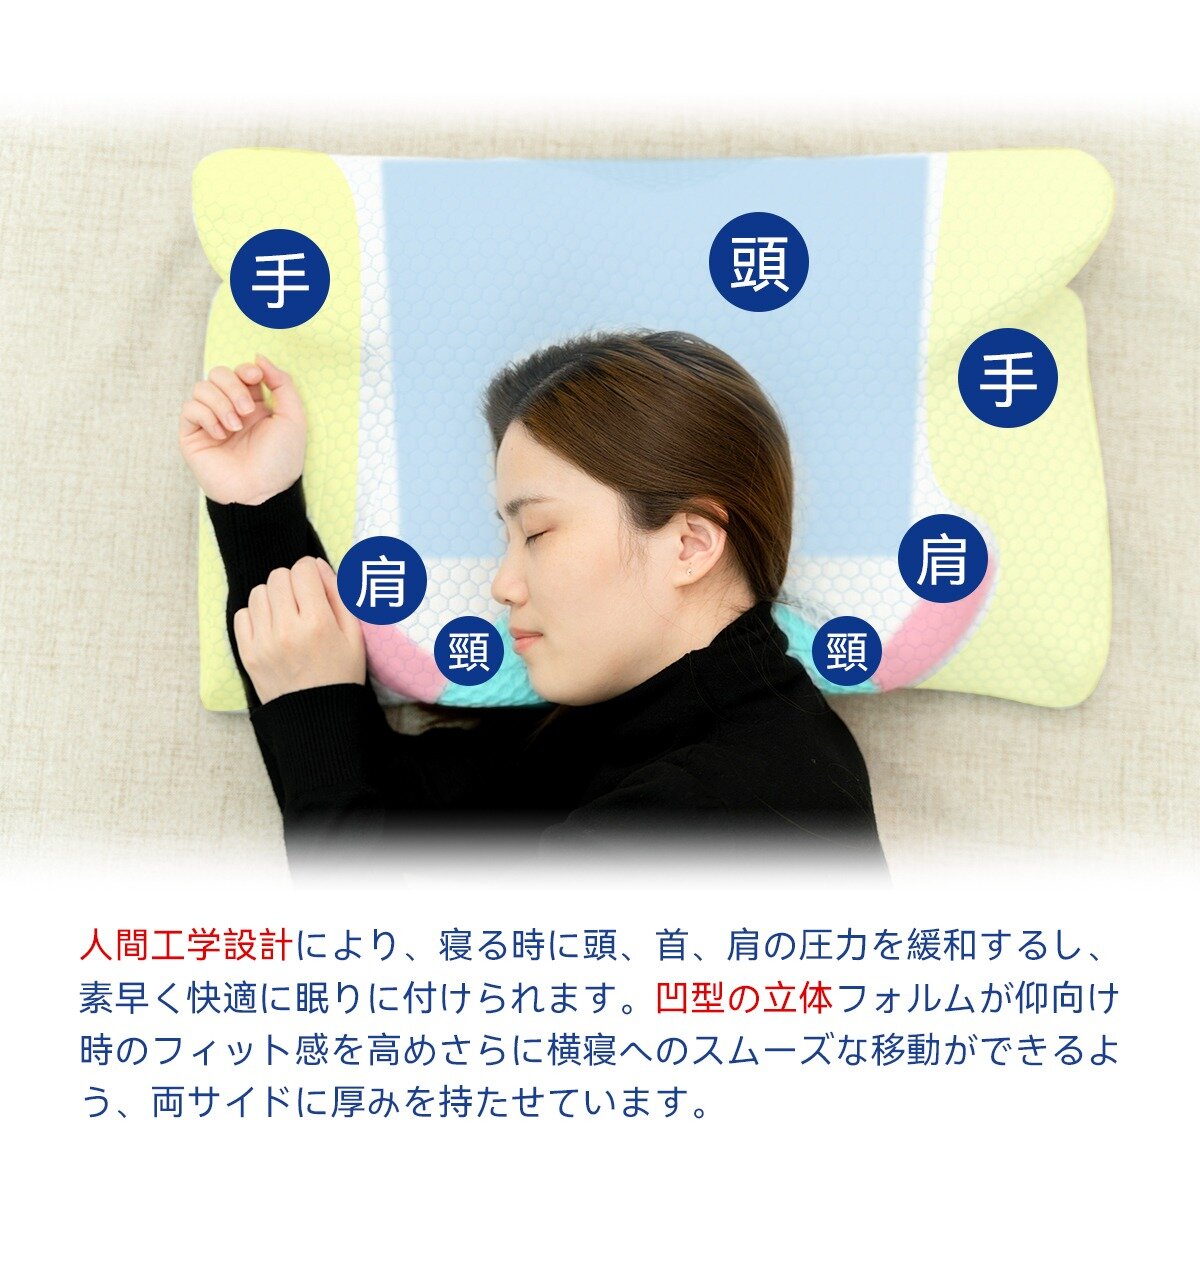 DEAR.MIN - Upgraded Quick Sleep Anti-Snoring Pillow｜Memory Foam Pillow｜3D Pressure Reducing Anti-Snoring Pillow｜Can add Lavender Sleeping Essential Oil